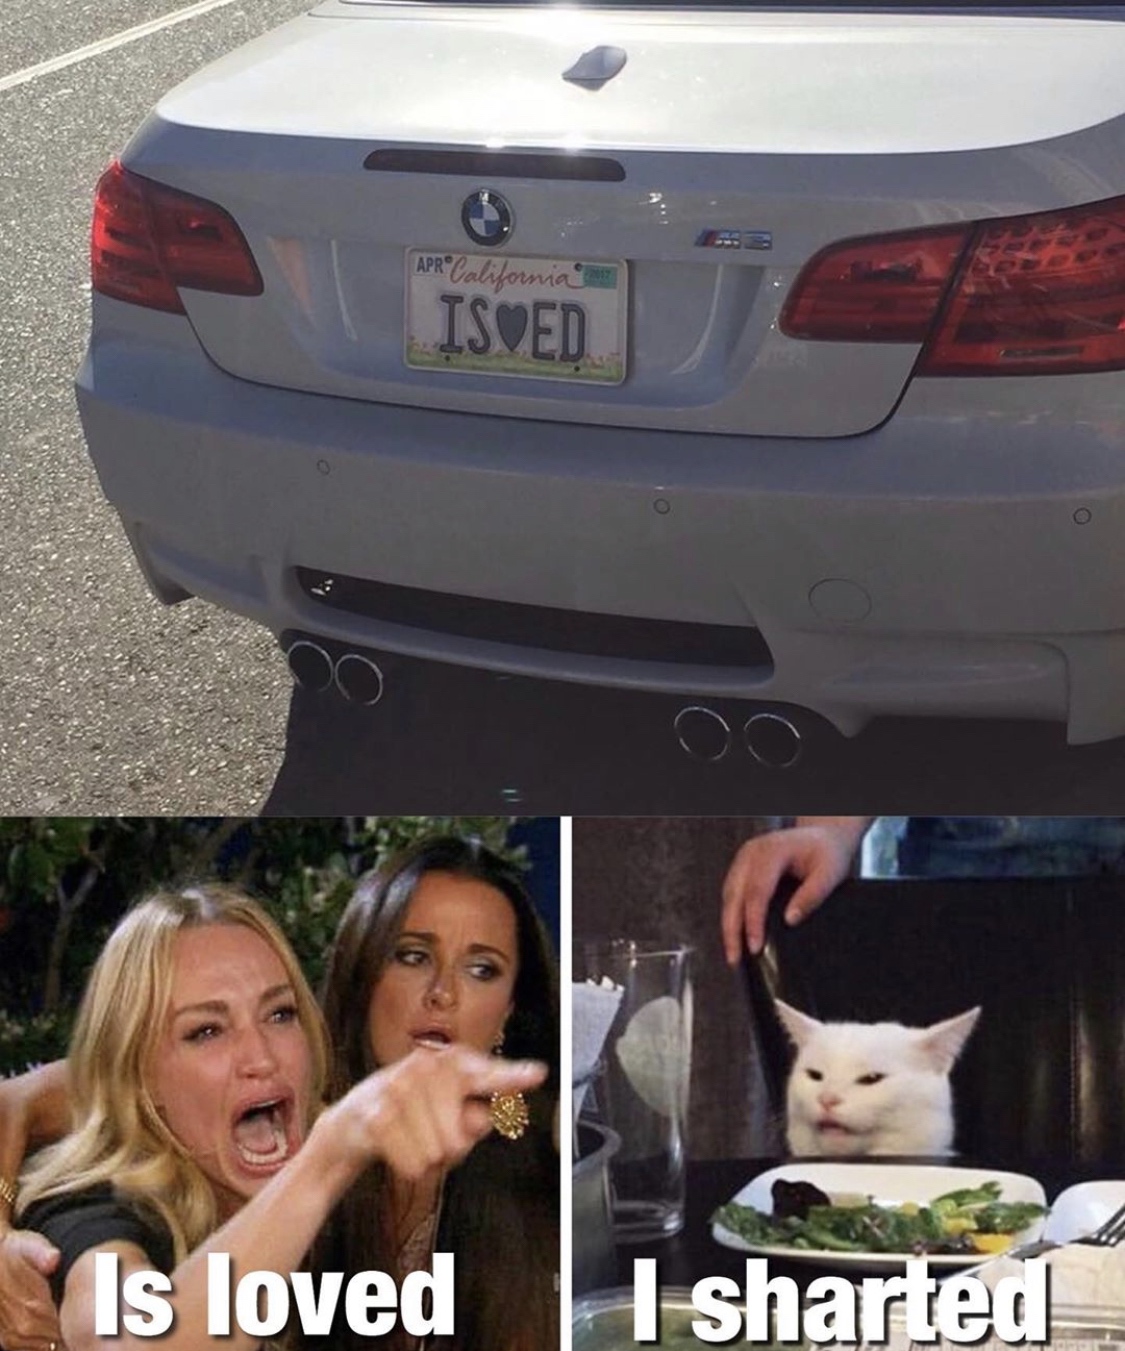 meme woman yelling at cat meme - Apr California Isoed Is loved I shartea